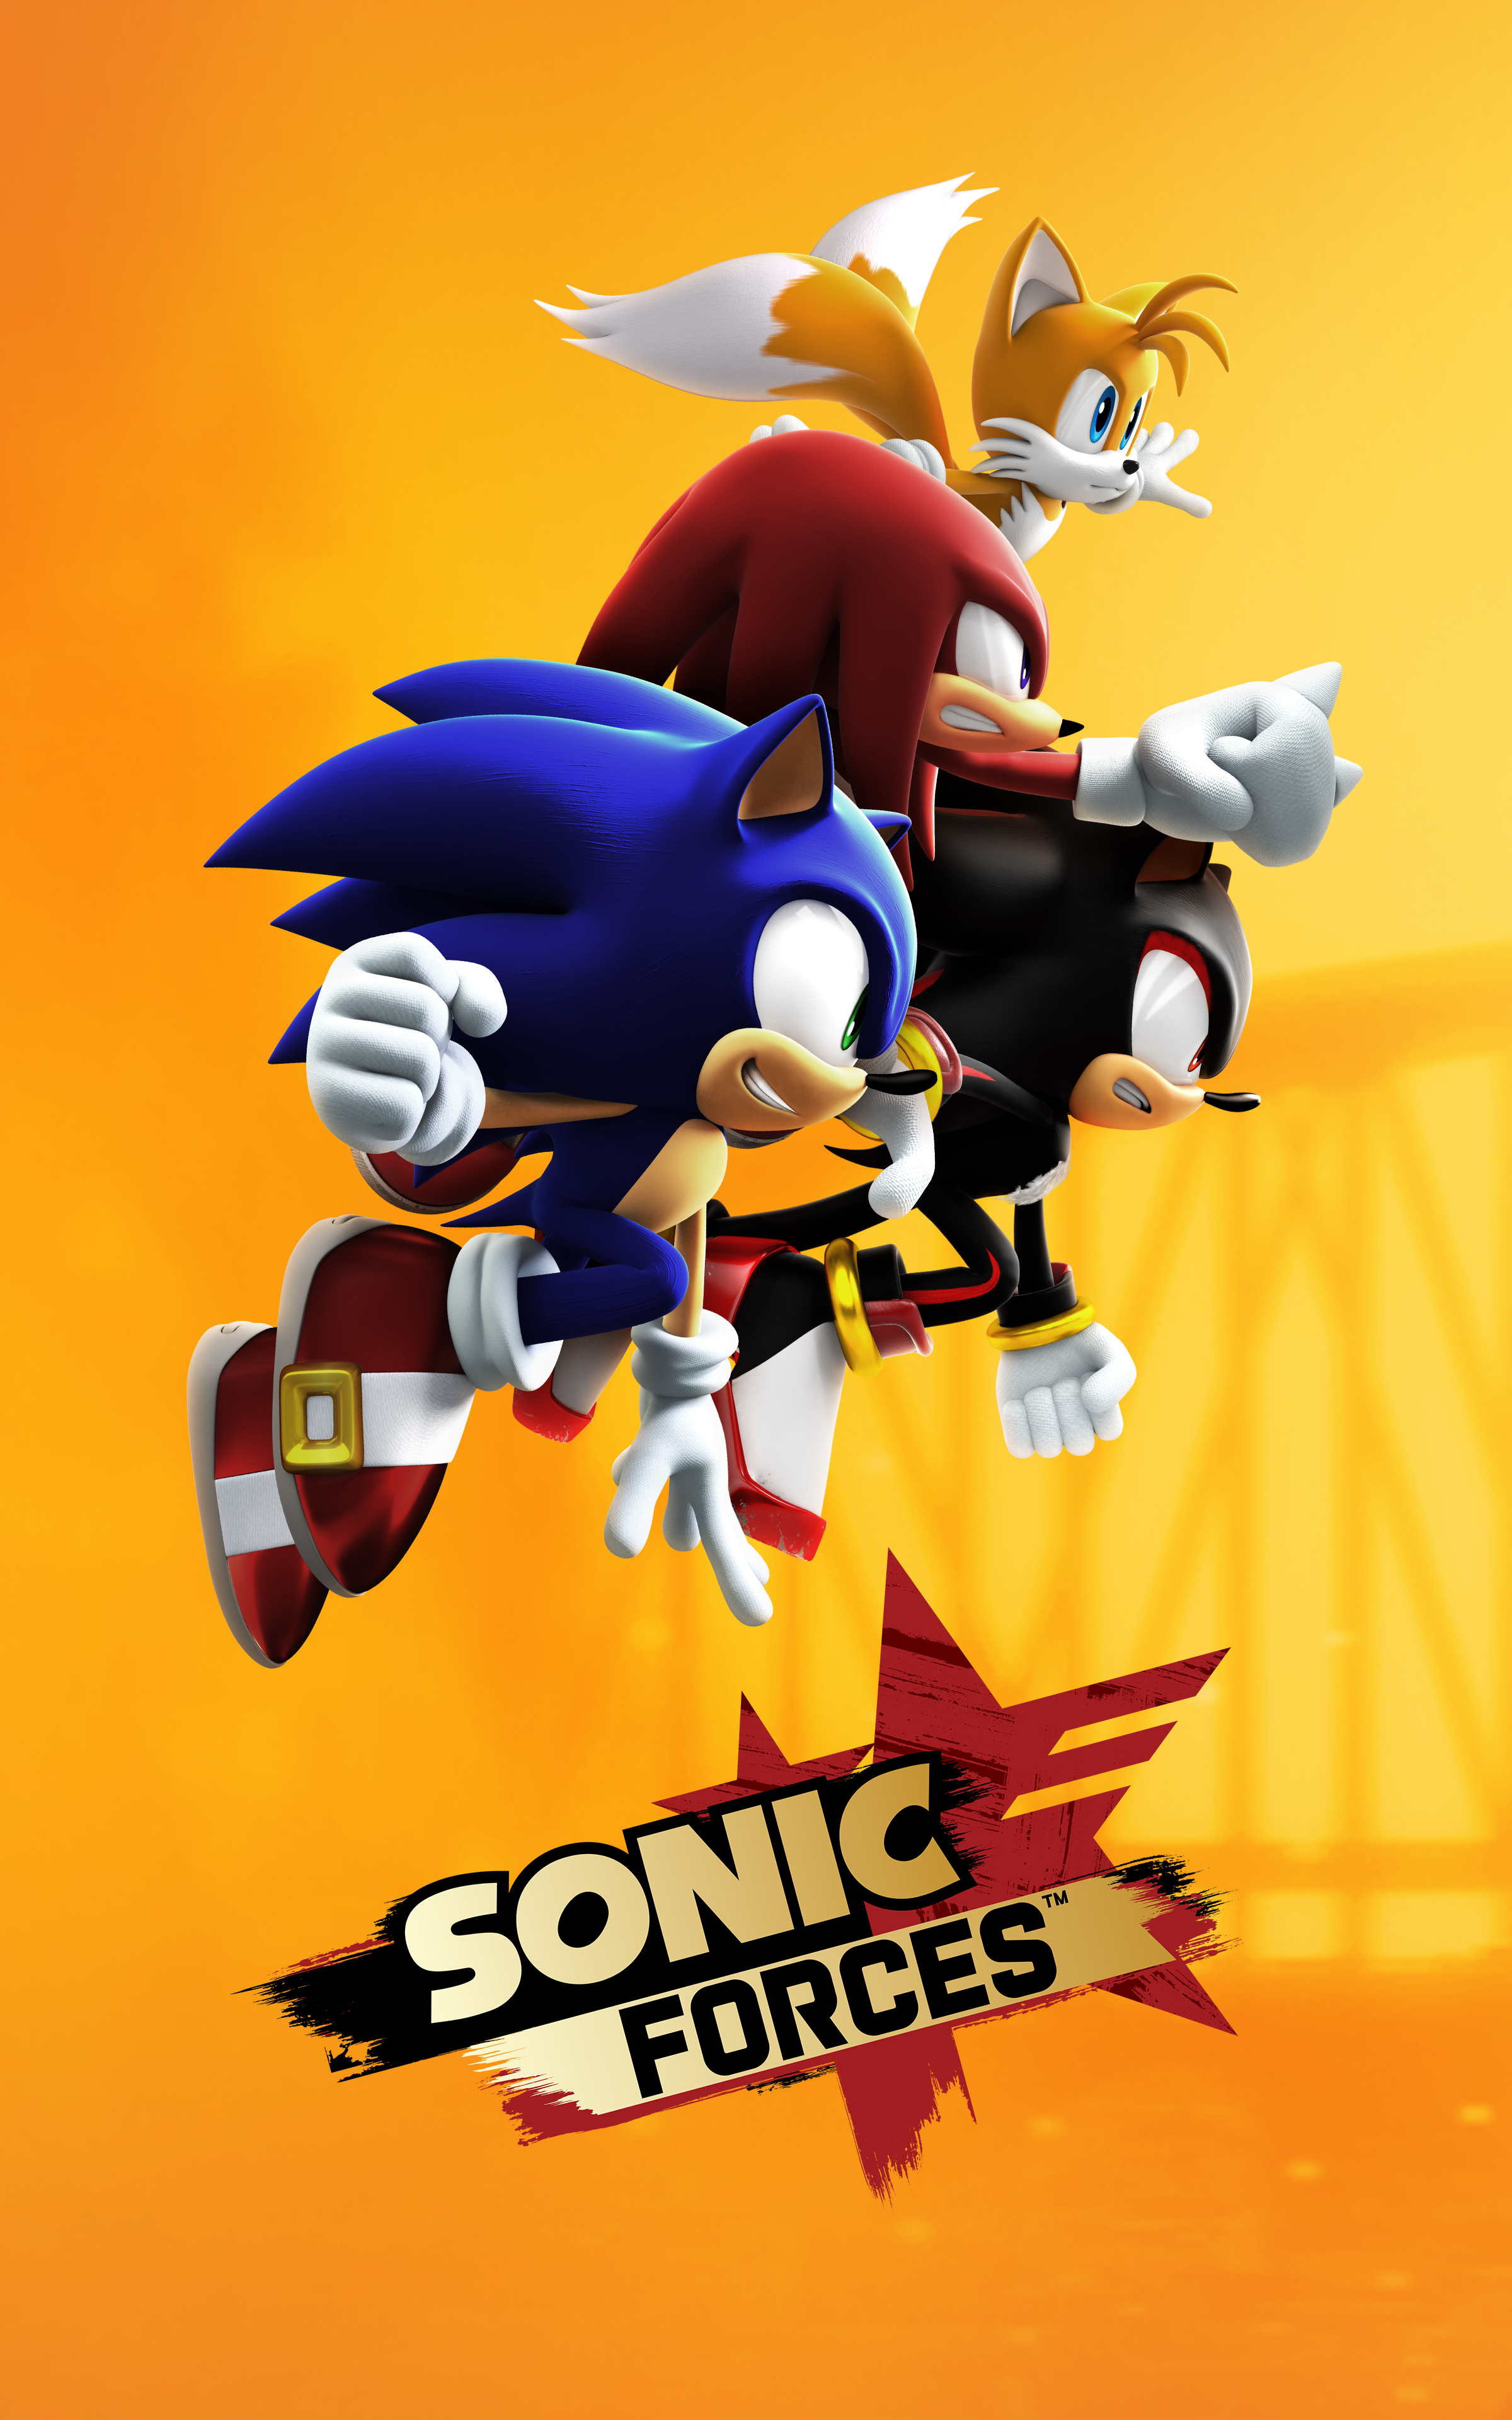 Sonic Forces - Running Gameのキャプチャ